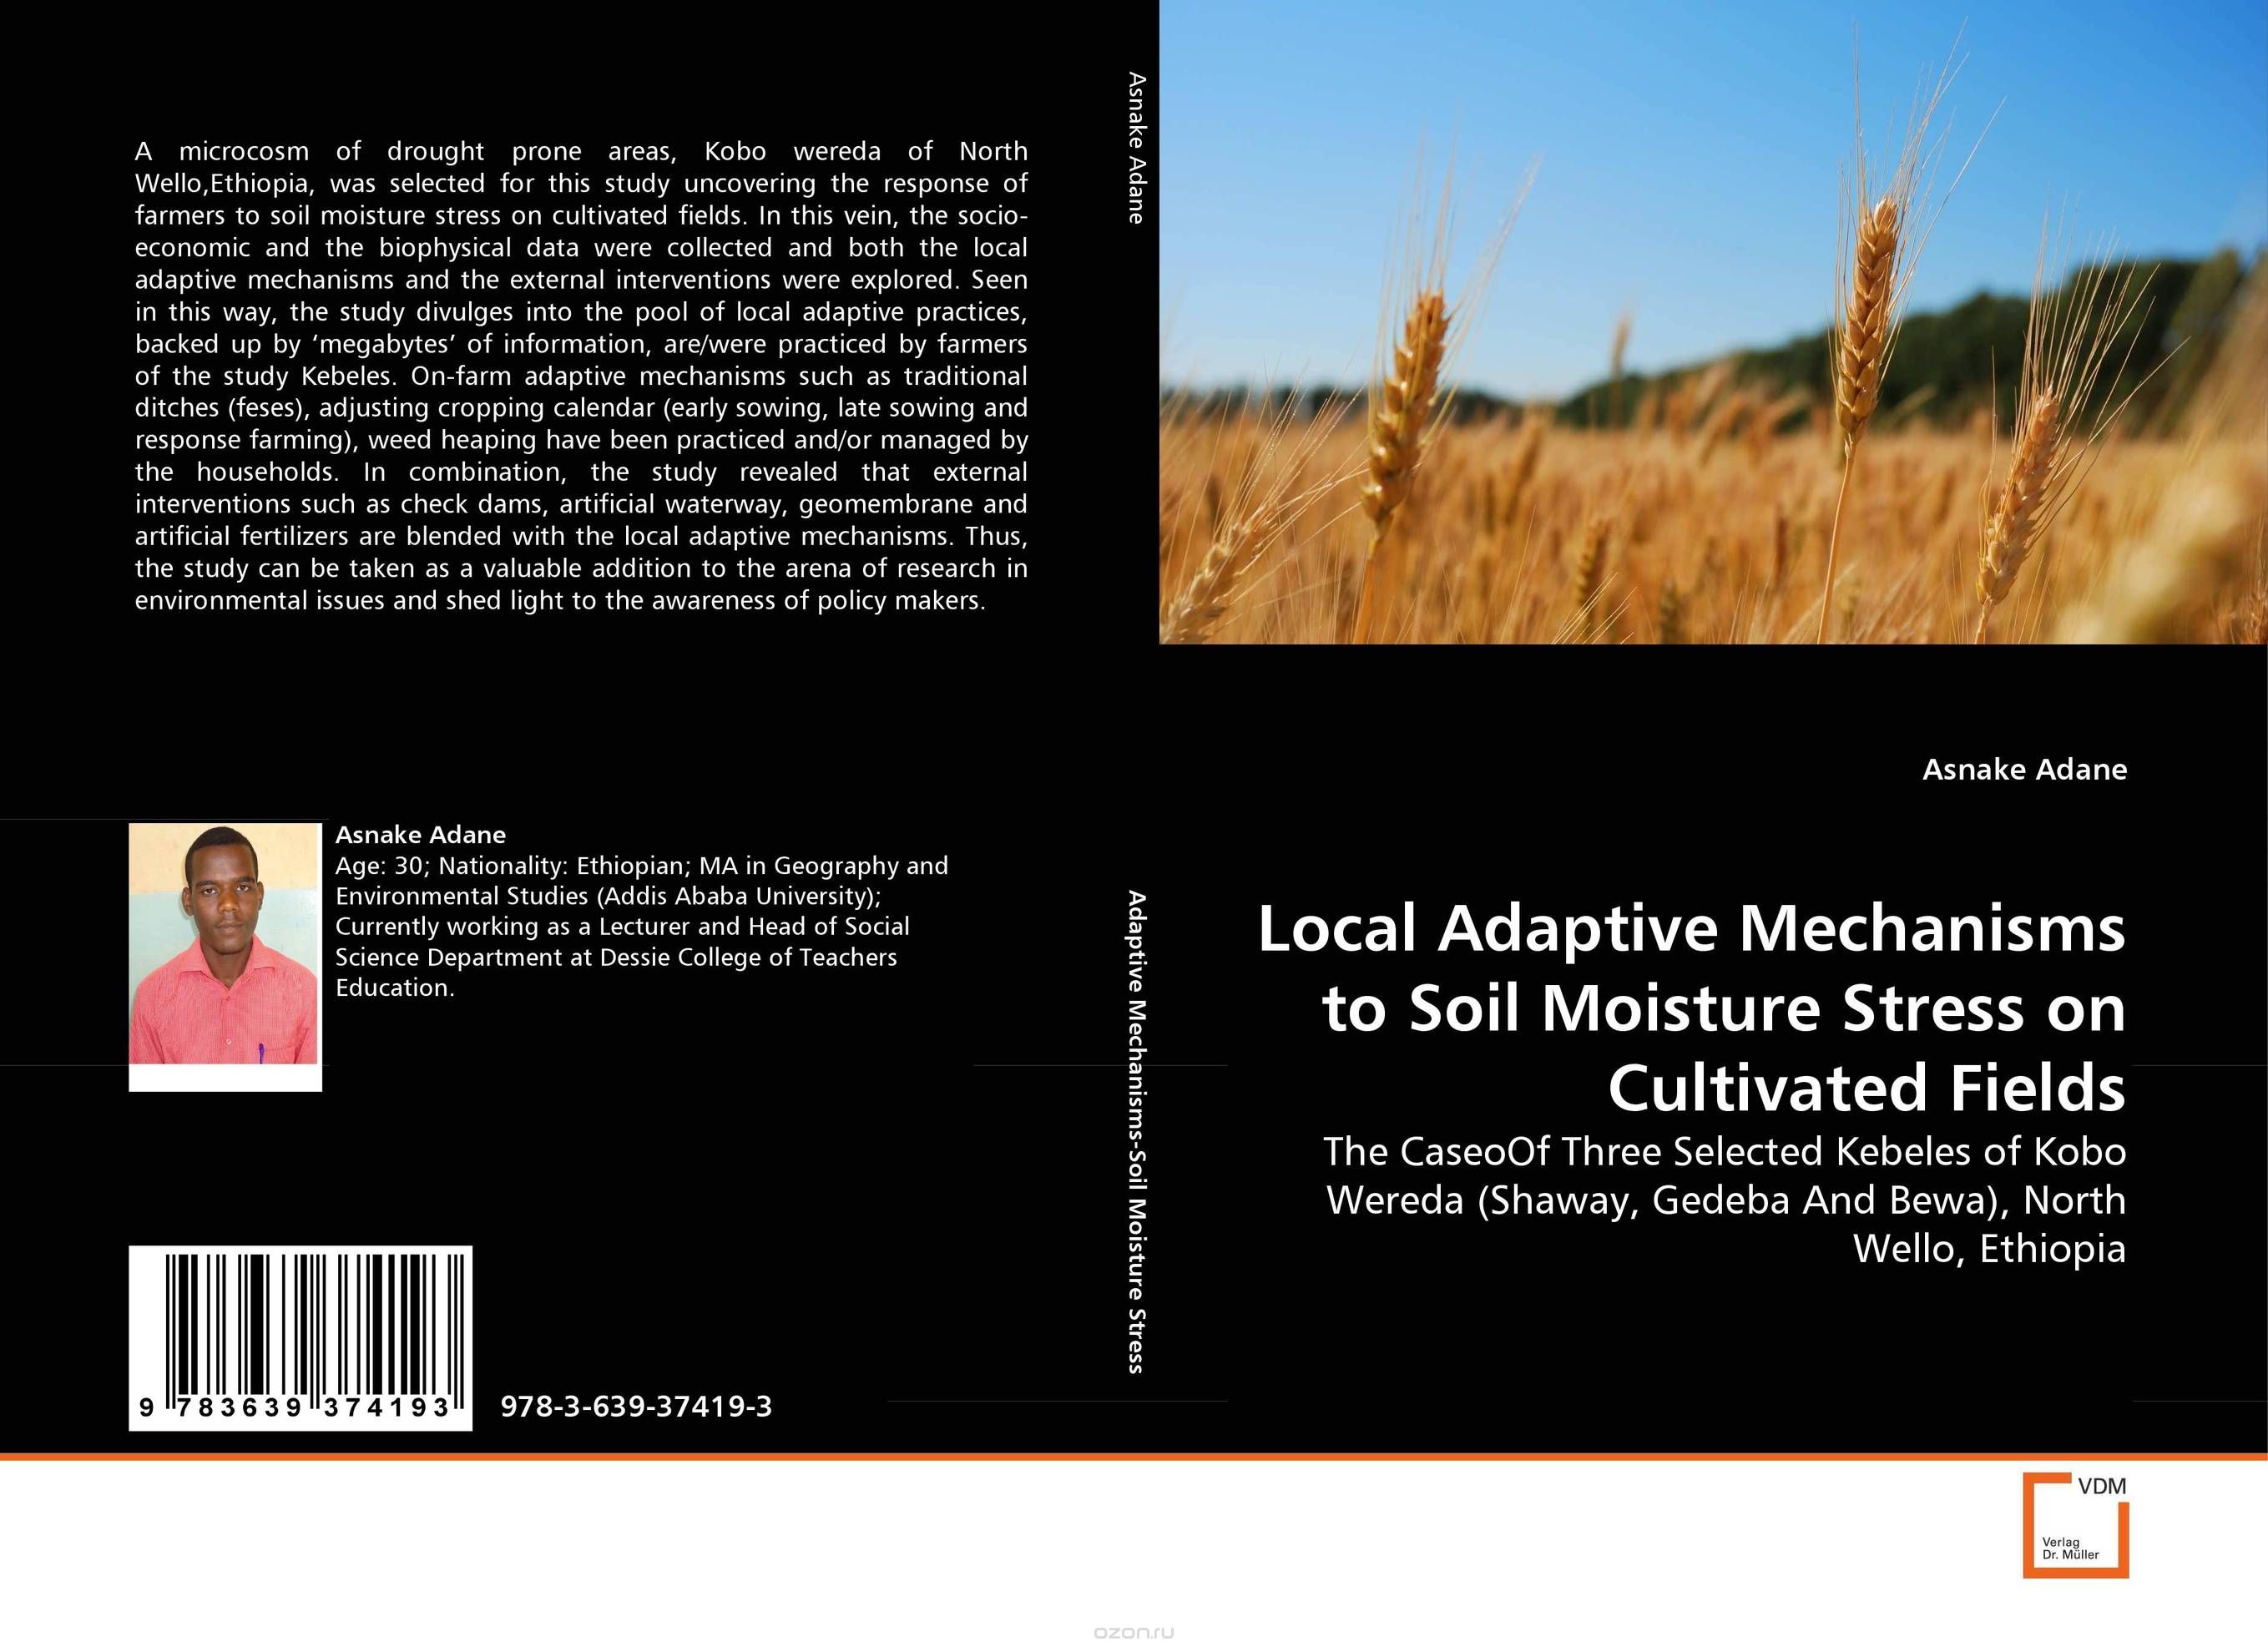 Скачать книгу "Local Adaptive Mechanisms to Soil Moisture Stress on Cultivated Fields"